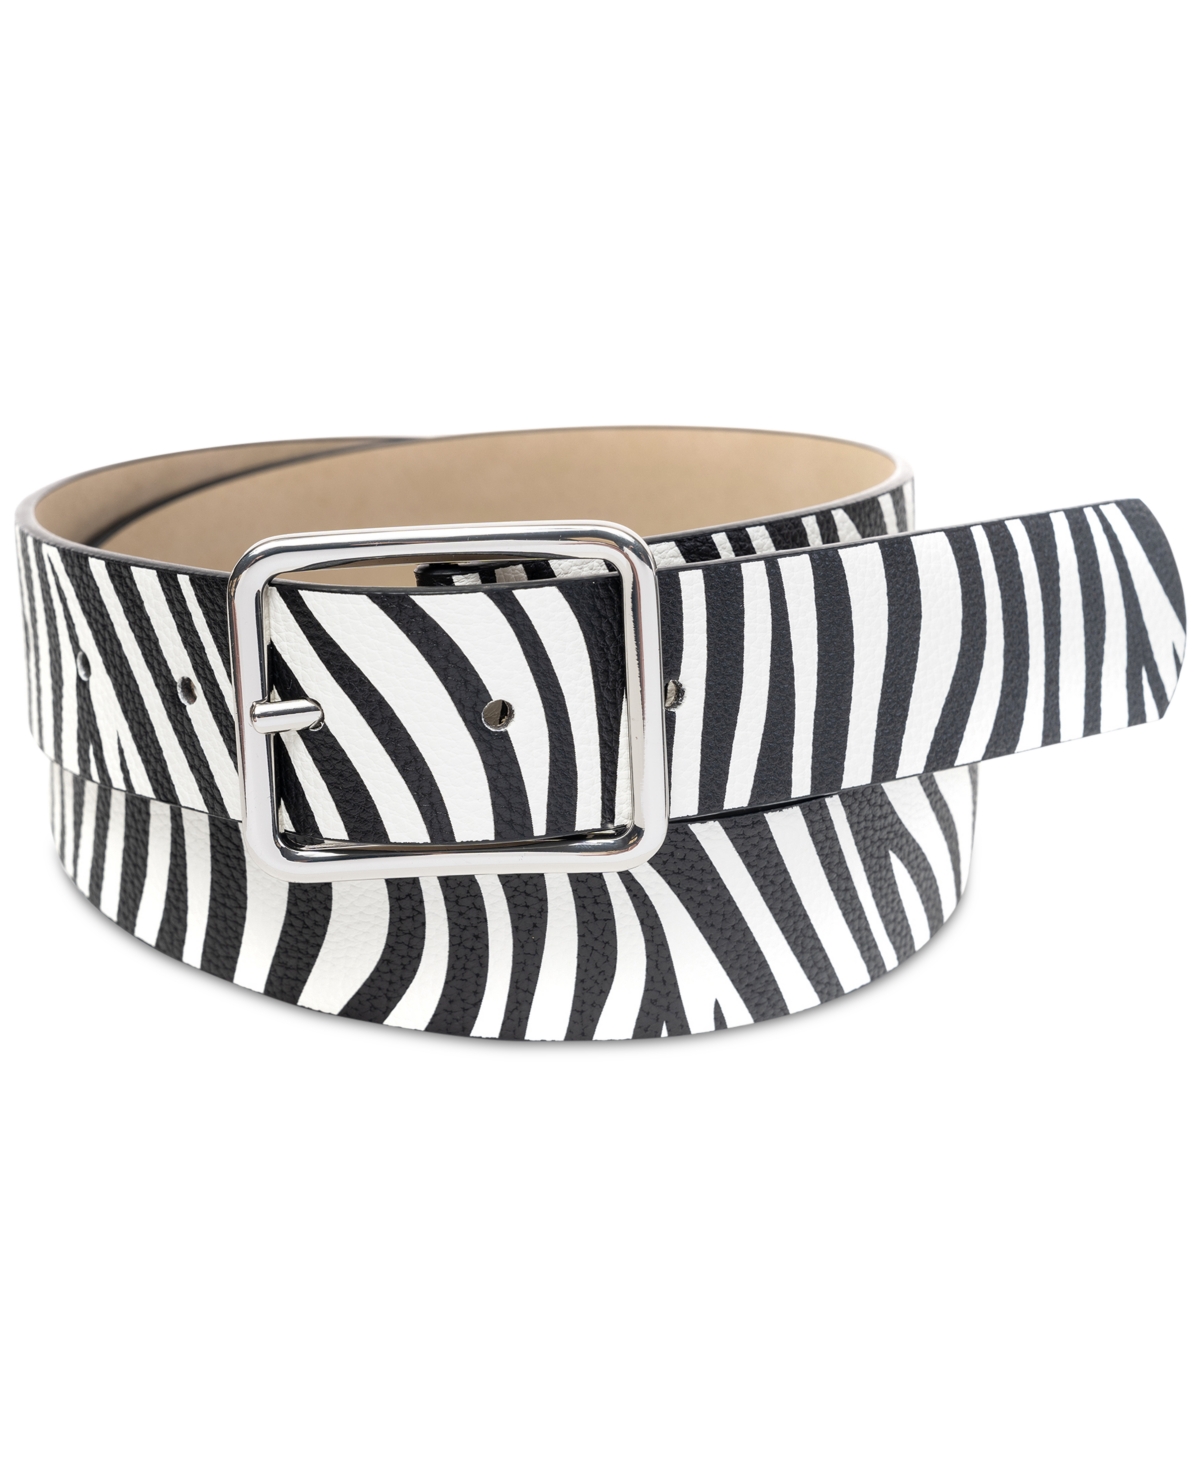 Women's Zebra-Print Faux-Leather Belt, Created for Macy's - Black White